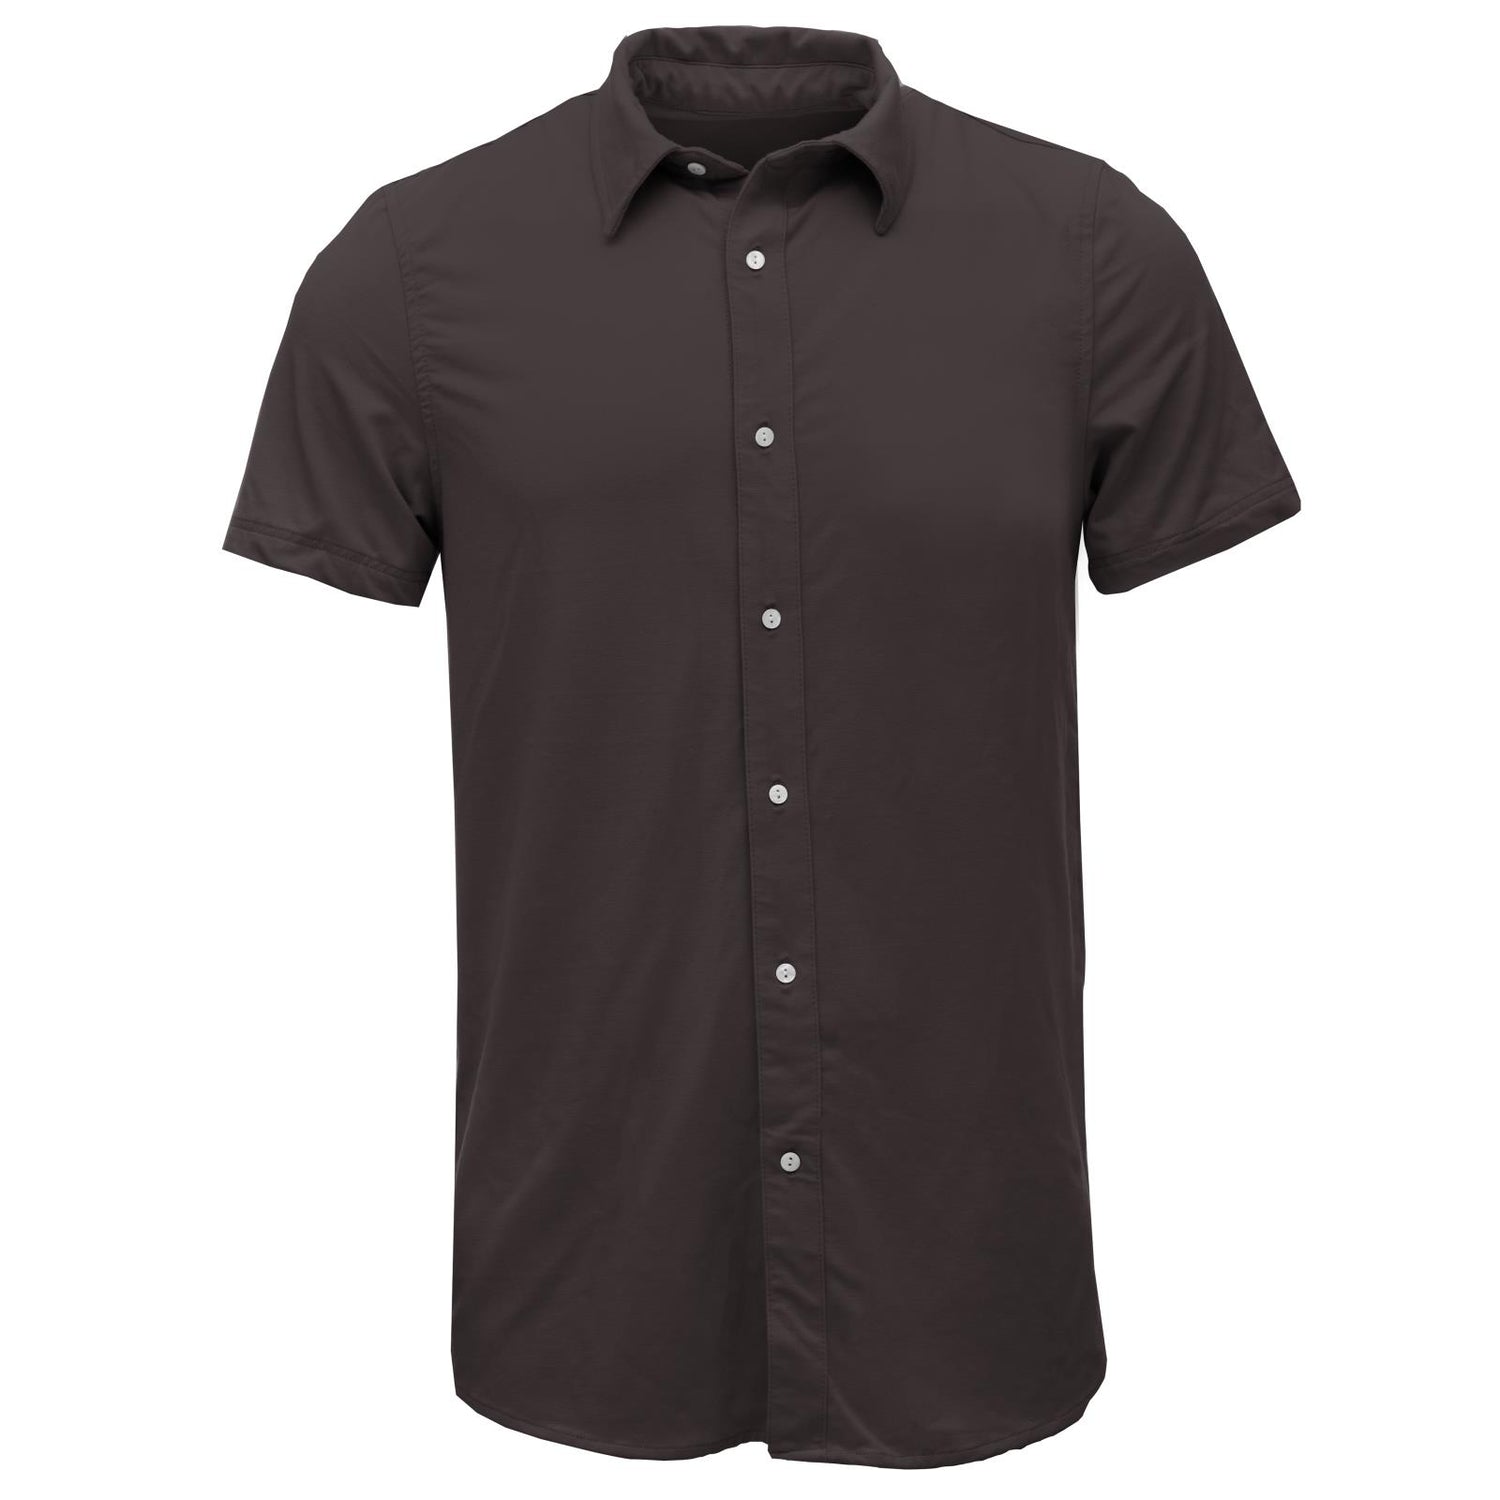 Men's Short Sleeve Woven Button Down Shirt in Midnight